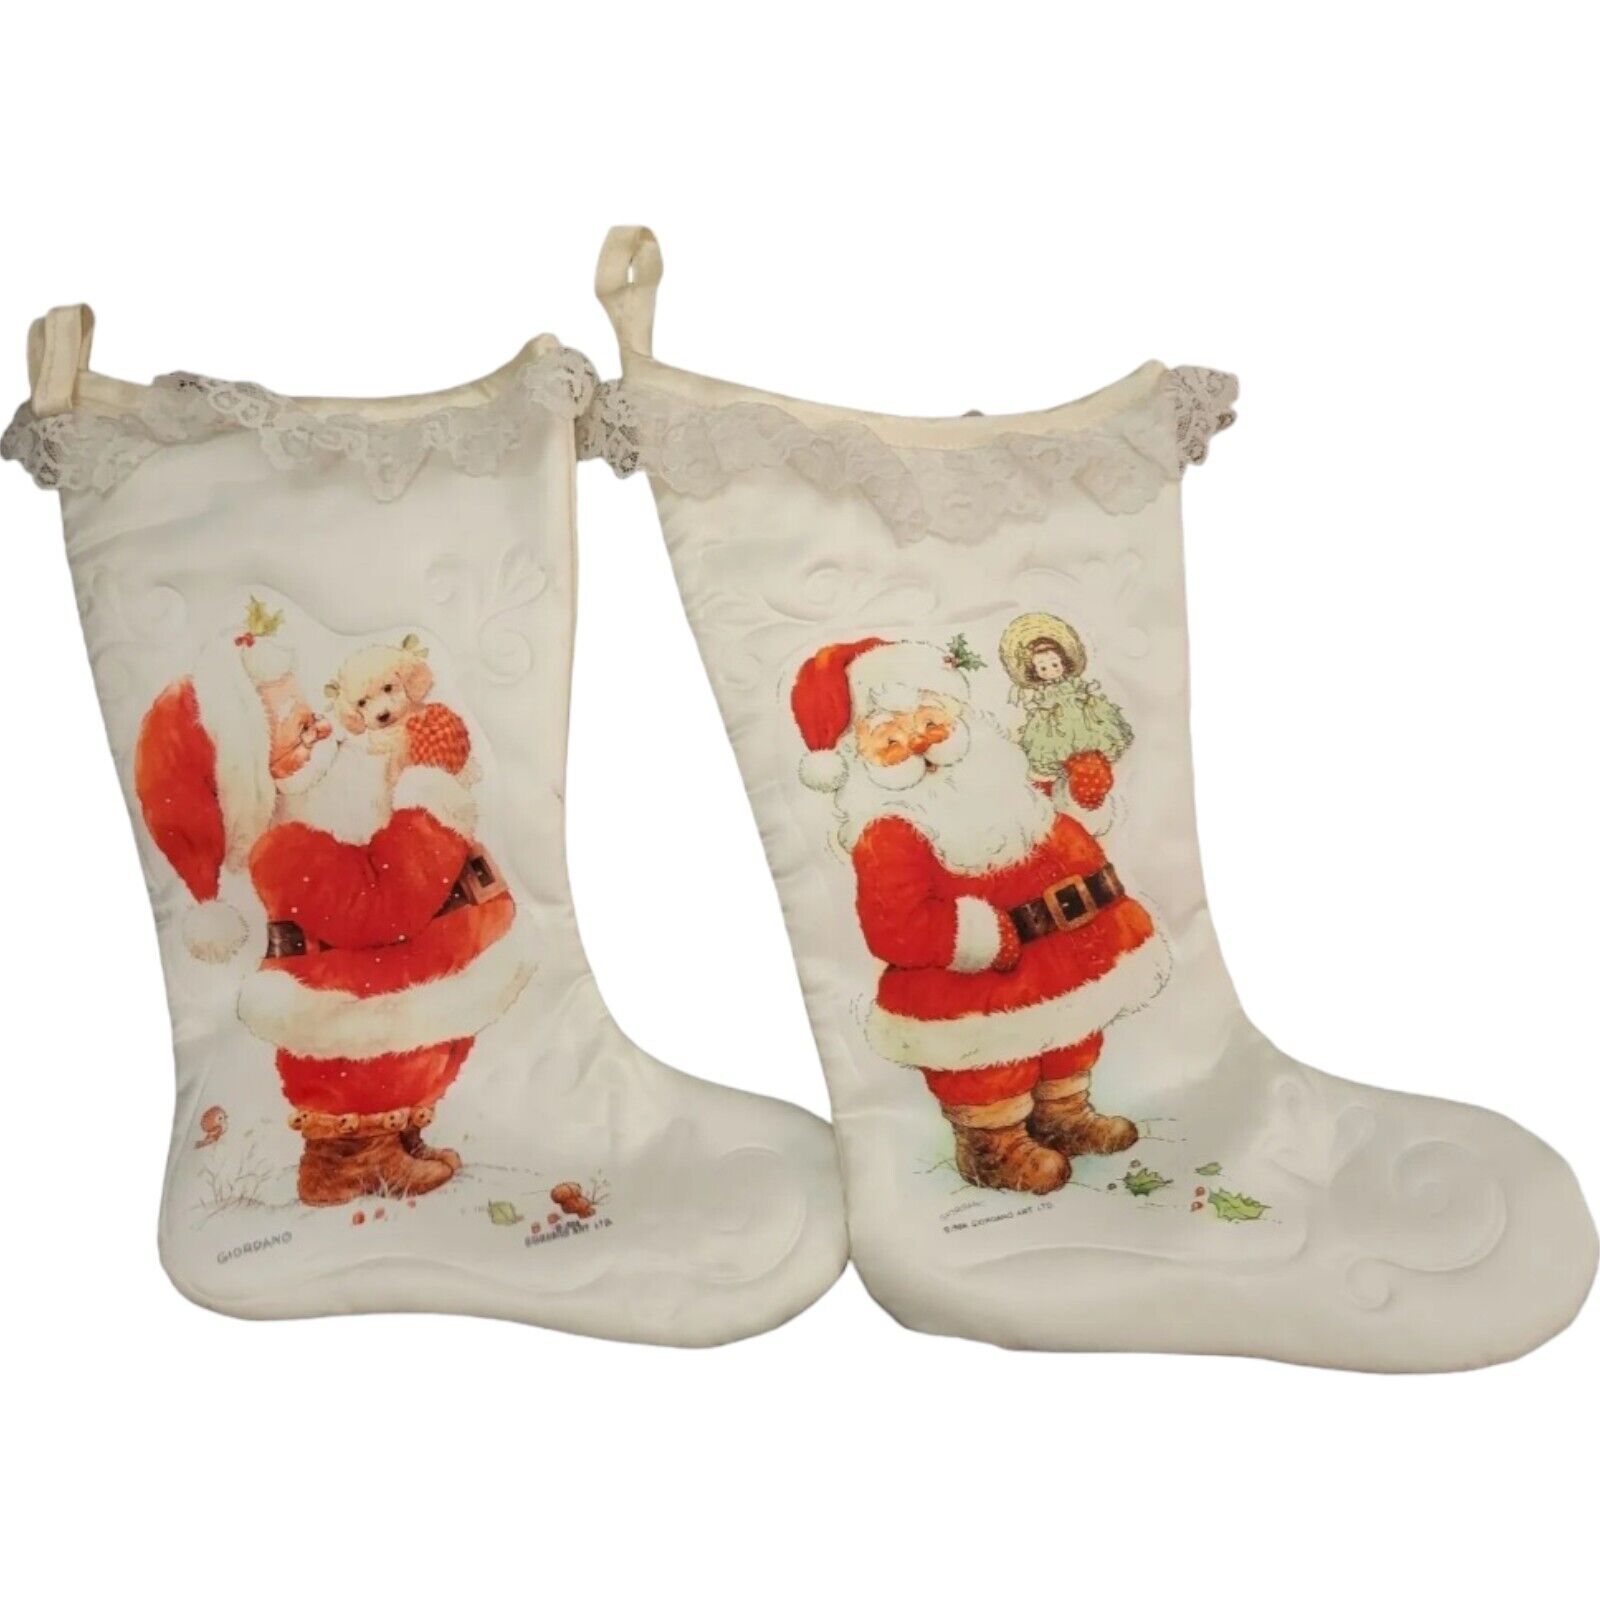 2 Vintage 1986 Giordano Satin & Lace Art Santa Christmas Stockings